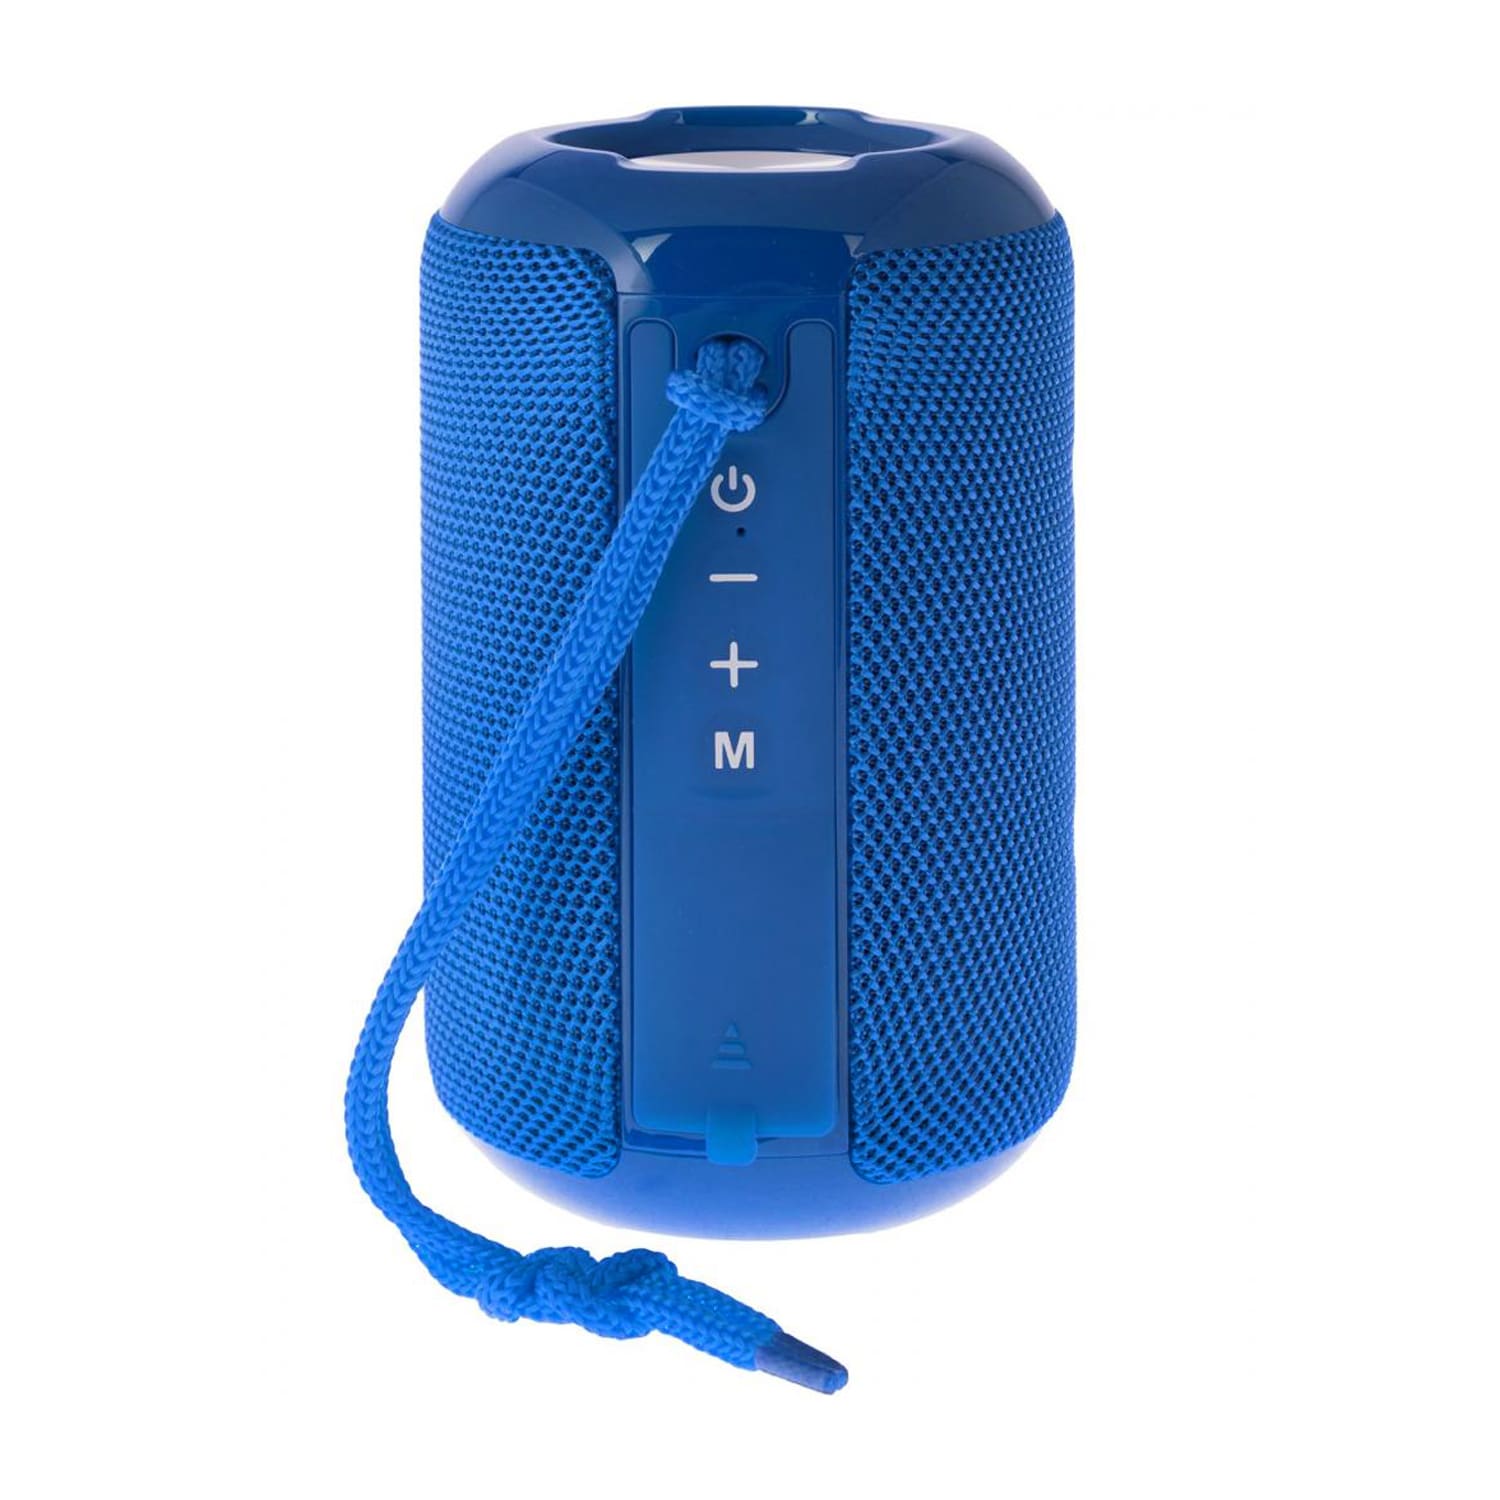 Акустическая система HOCO HC1, Синий Bluetooth SPK active 5W*1, 1200mAh, BT 5.0/FM/microSD/USB/AUX, blue